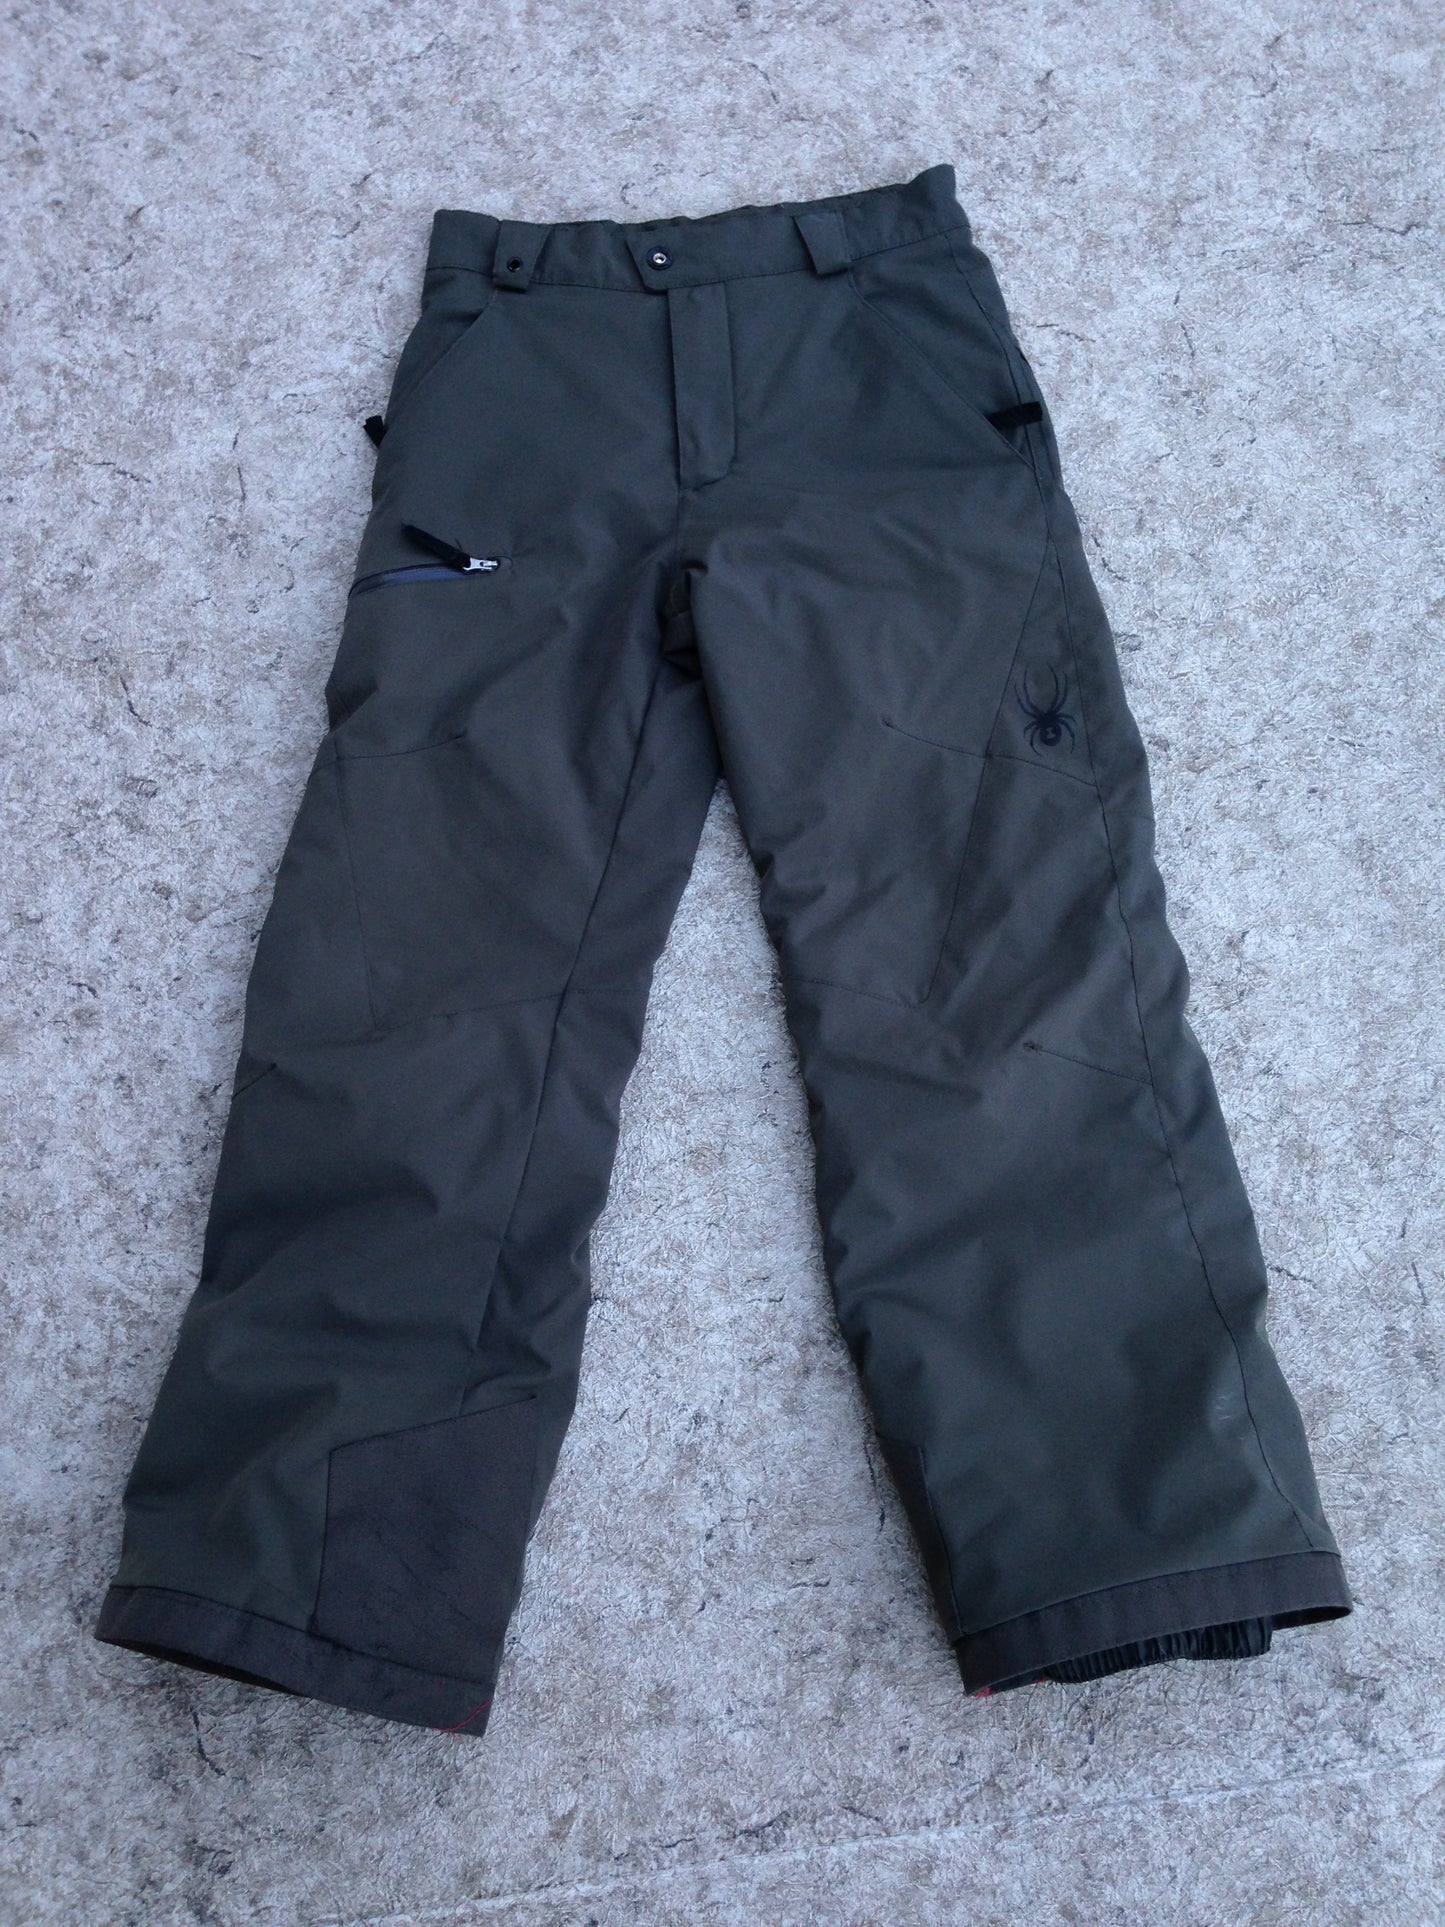 Snow Pants Child Size 12 Spyder Smoke Grey Snowboarding Adjustable Waist